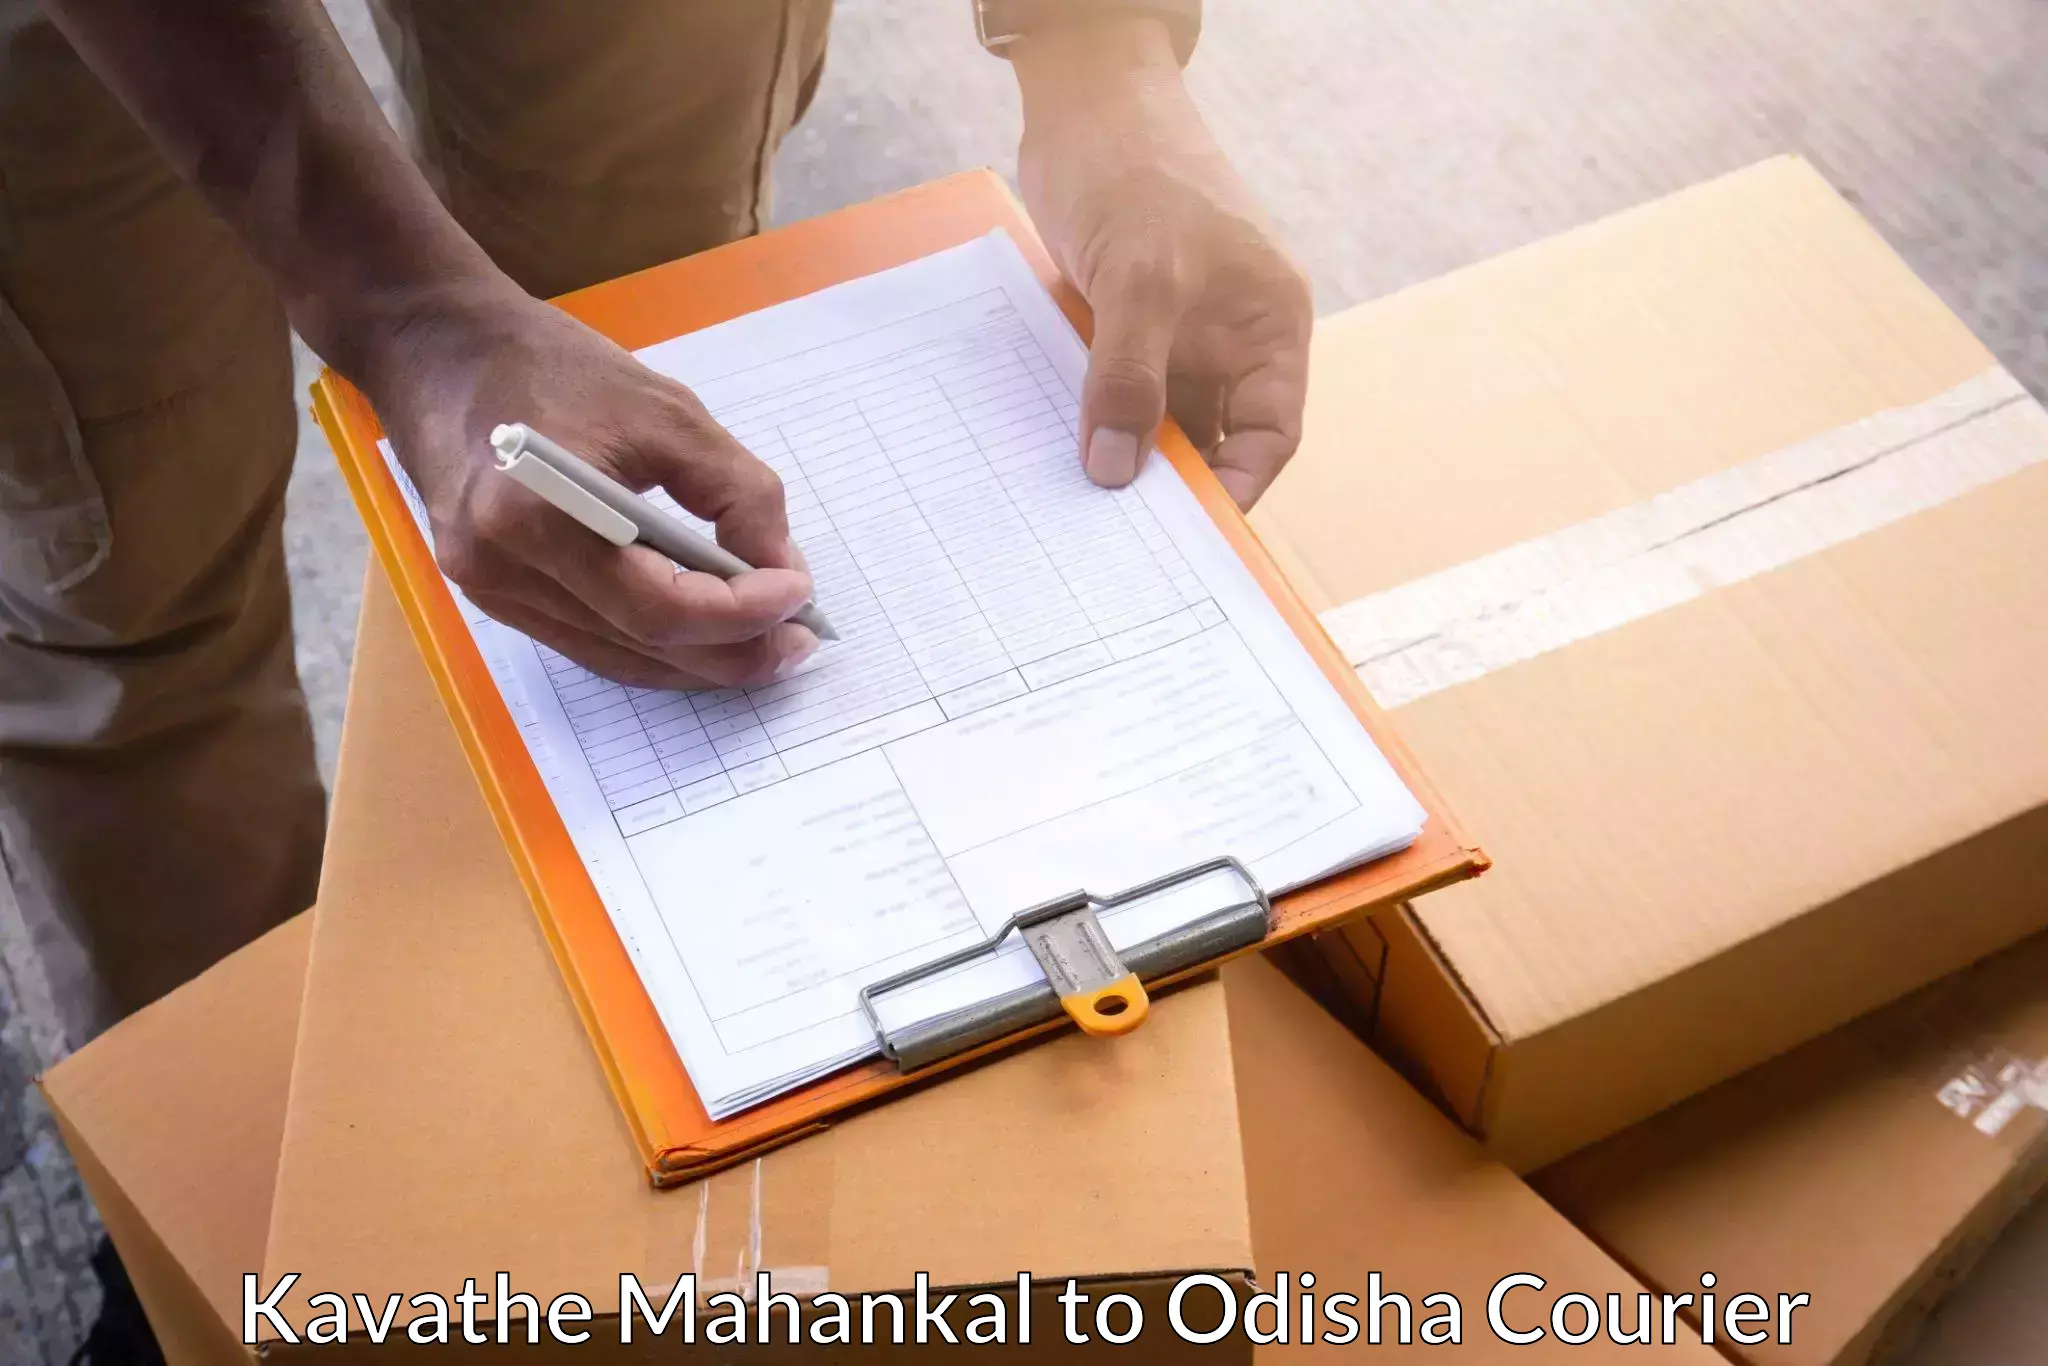 Sustainable courier practices Kavathe Mahankal to Ukhunda